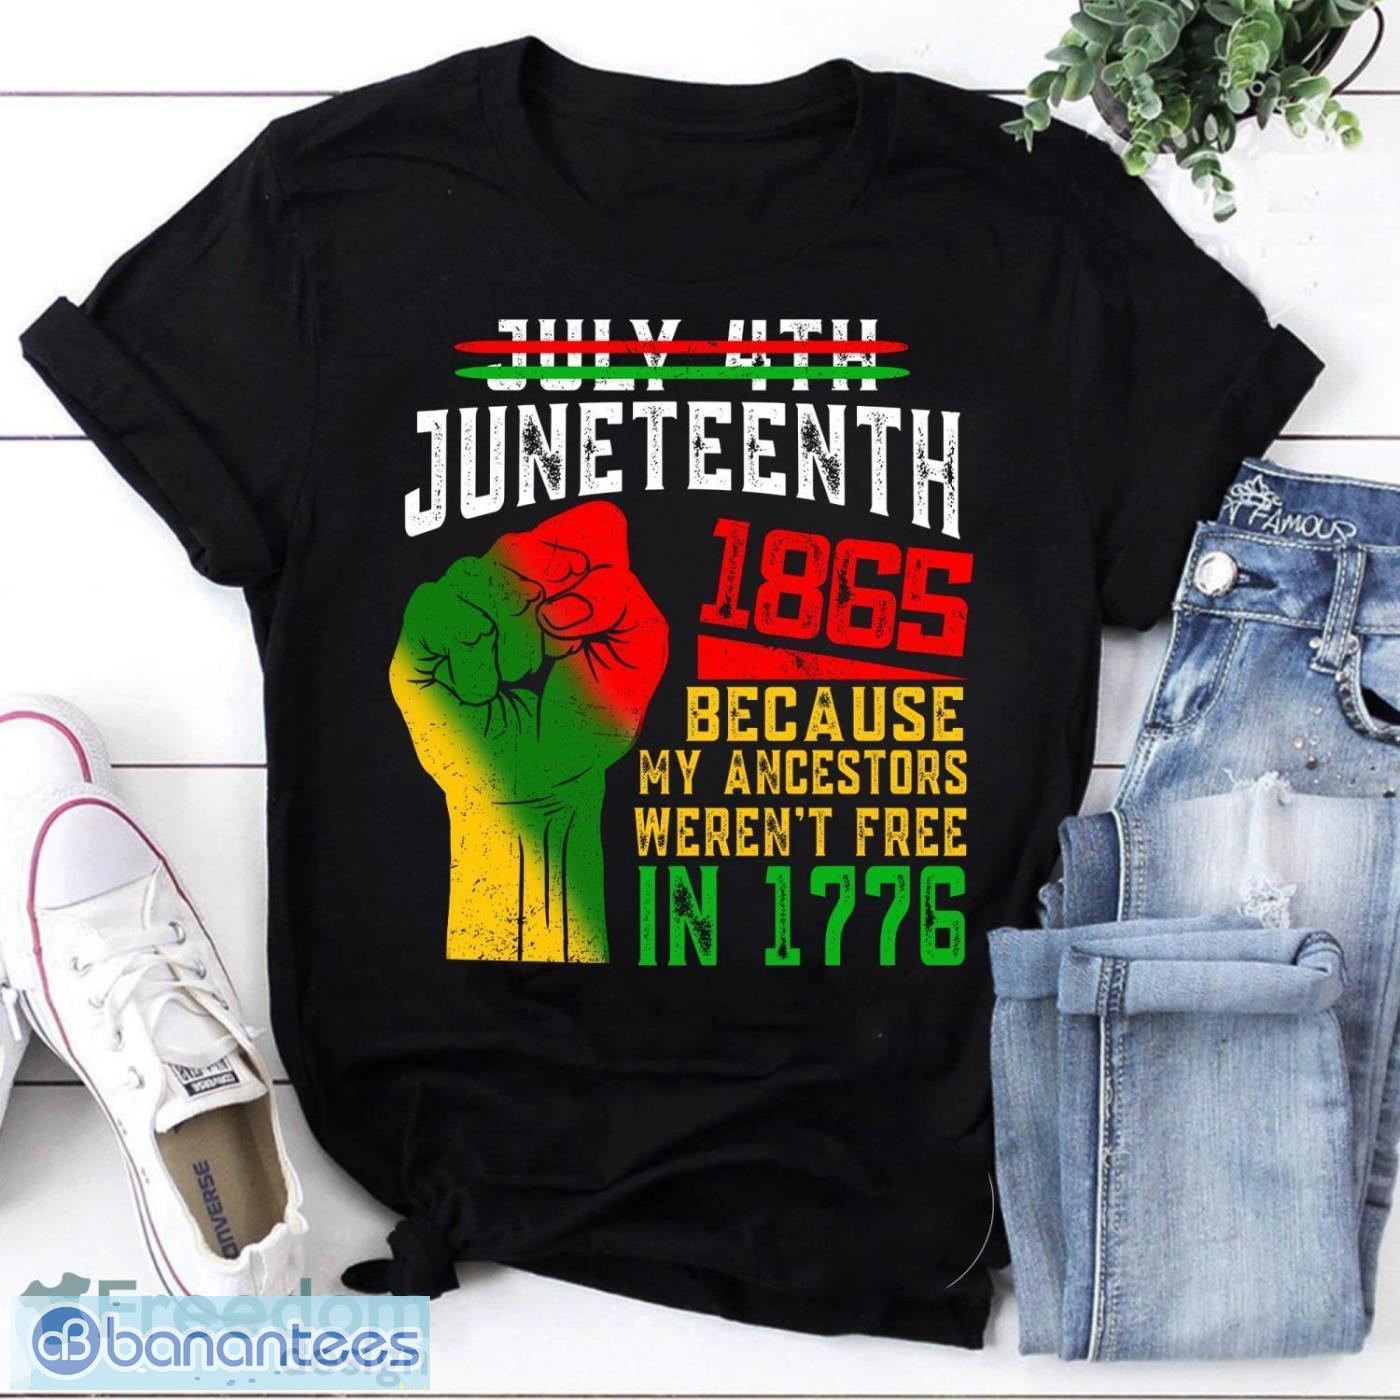 Juneteenth 1865 Because My Ancestors Weren’t Free In 1776 Vintage T-Shirt Juneteenth Shirt Product Photo 1